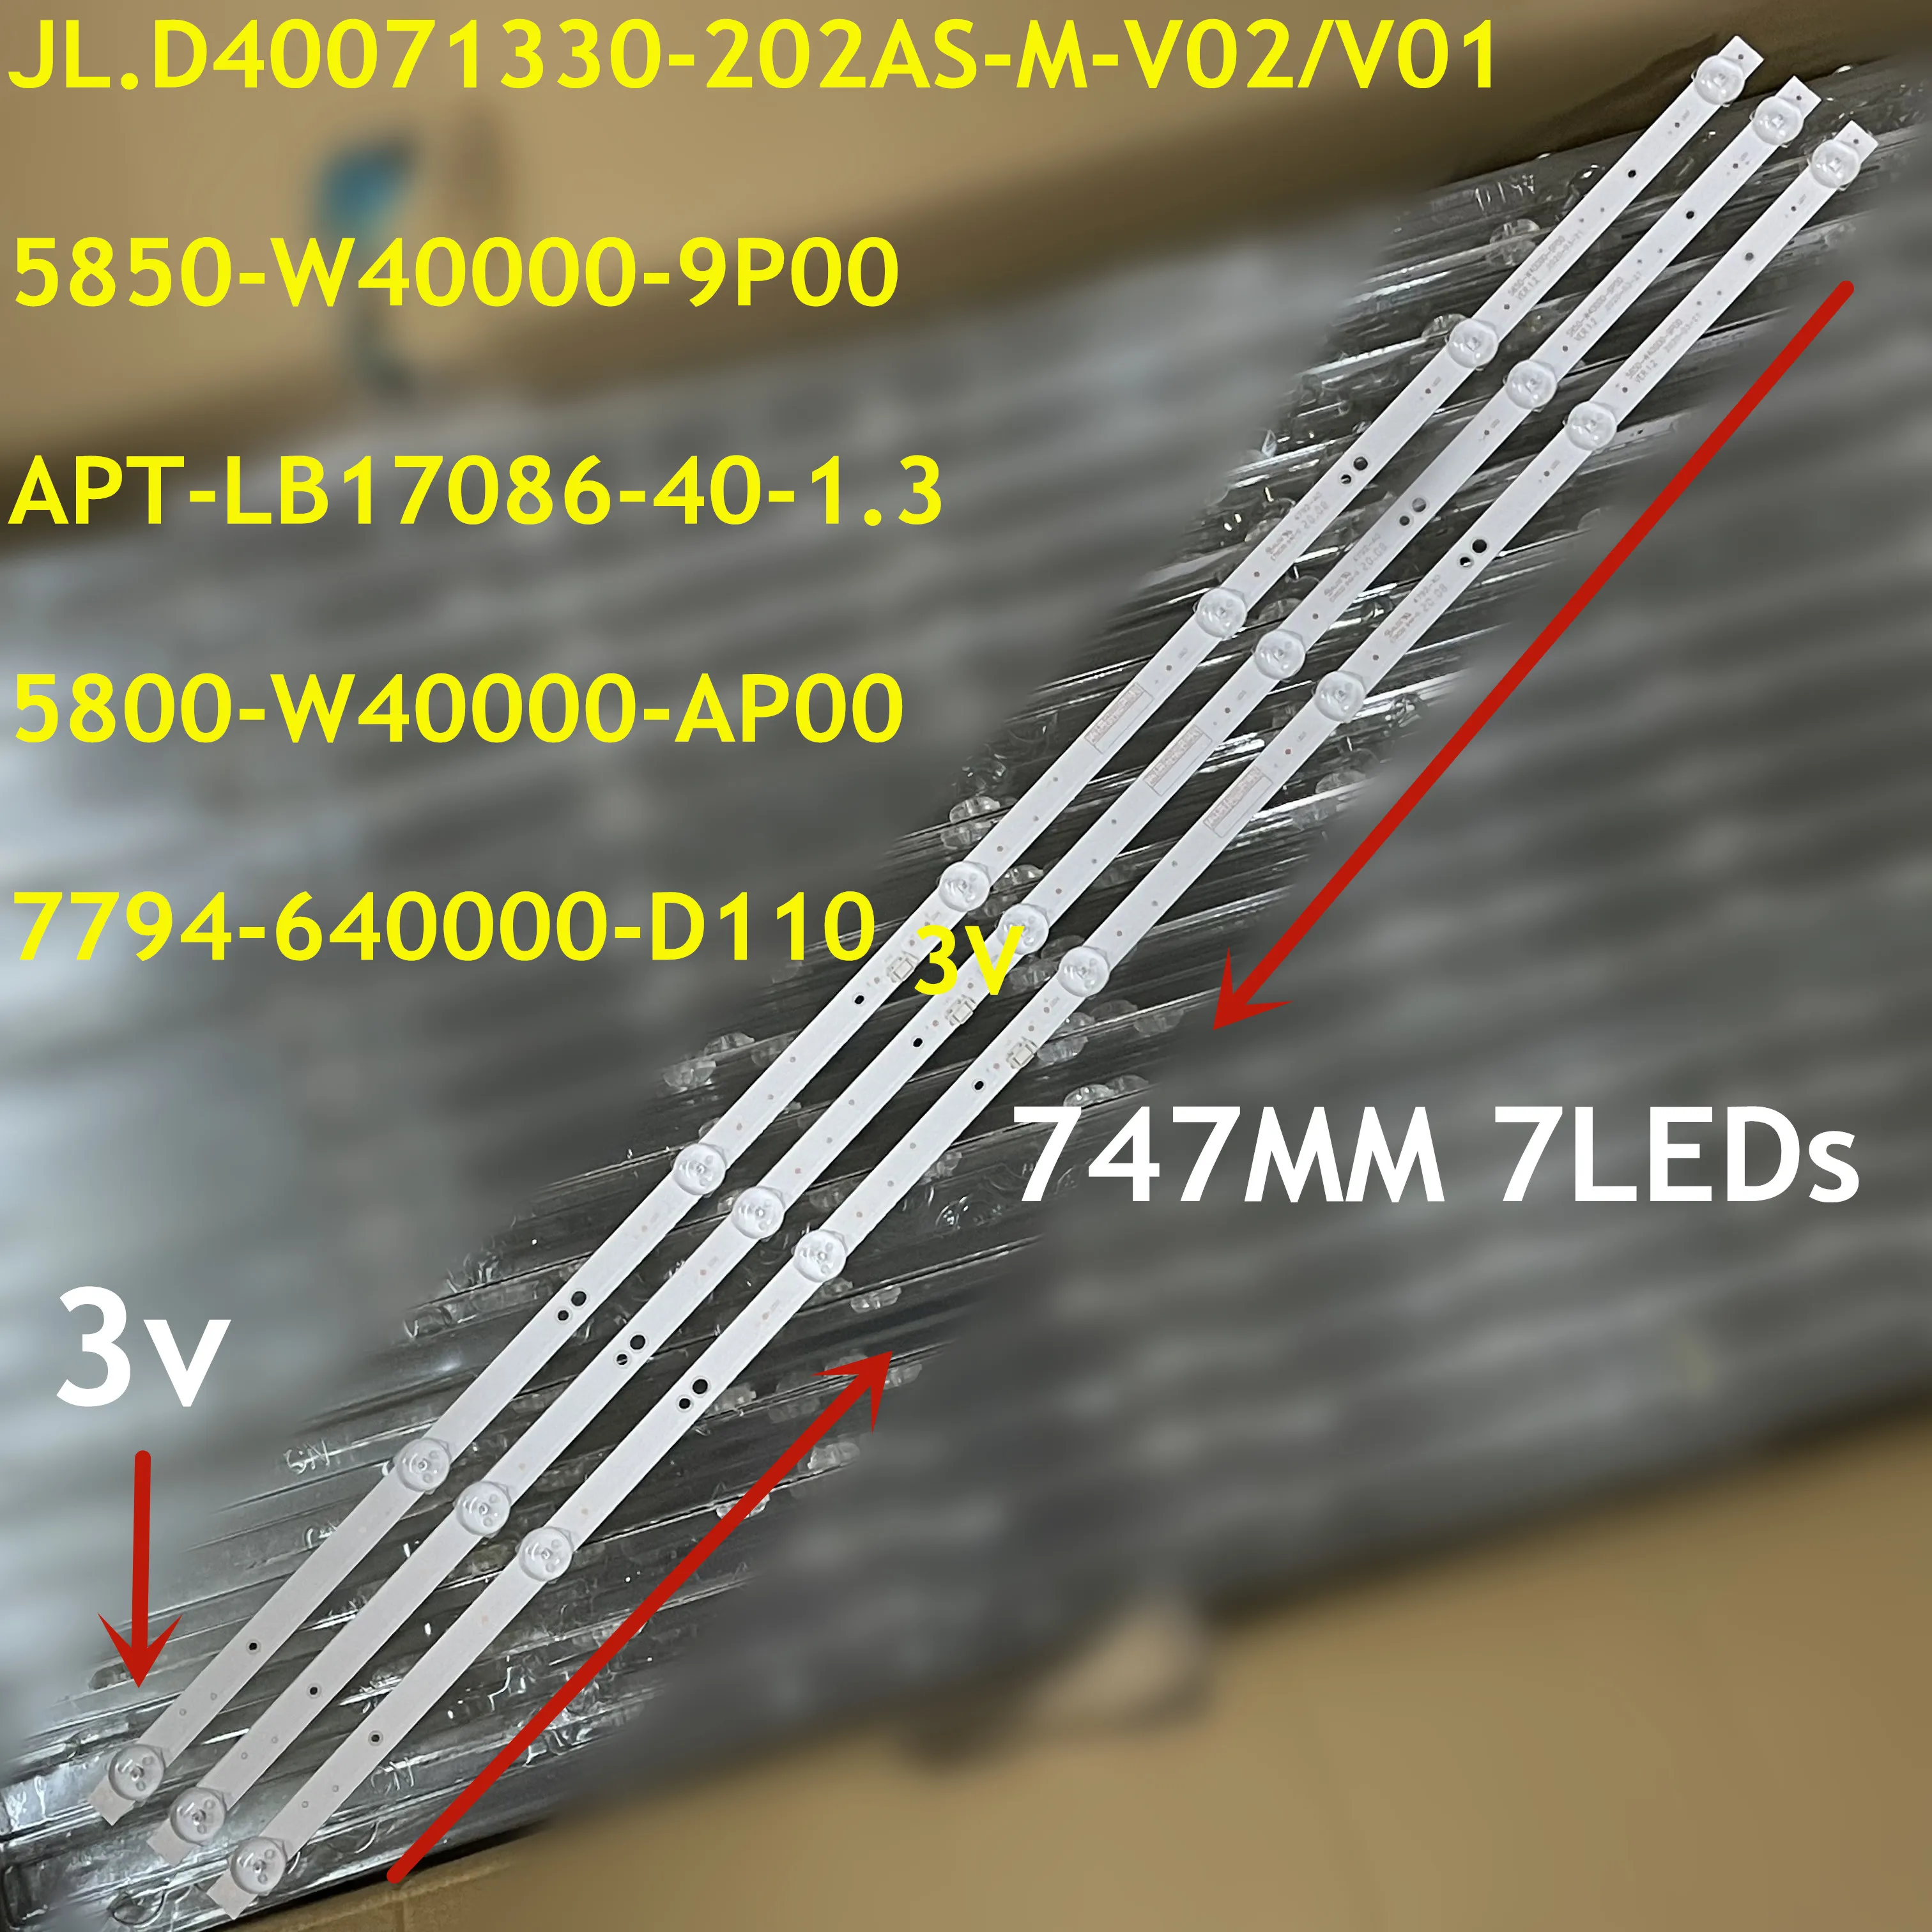 

30pcs LED Strip CRH-A403030030777KRev1.0 JL.D40071330-202AS-M-V02 5850-W40000-9P00 7779-640000-D100 For Skywort 40X6 40E2 40E2AS